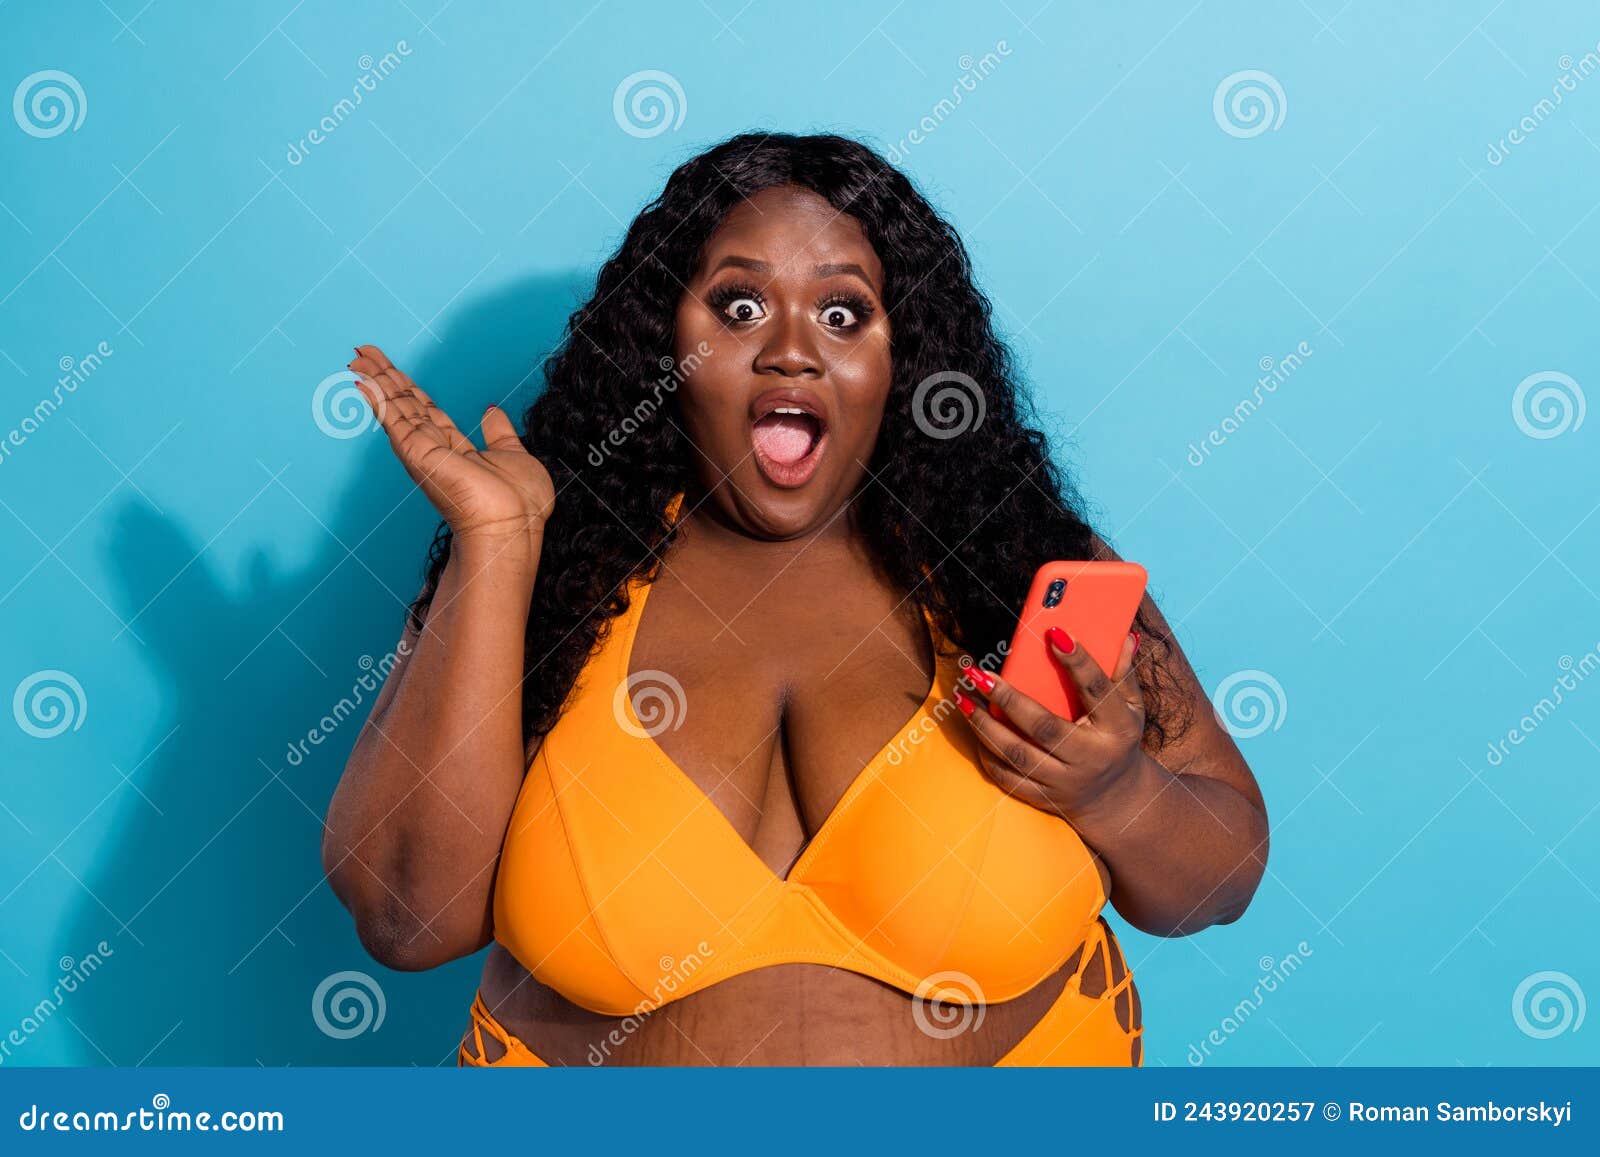 cristine fernandes add hot fat black chicks photo